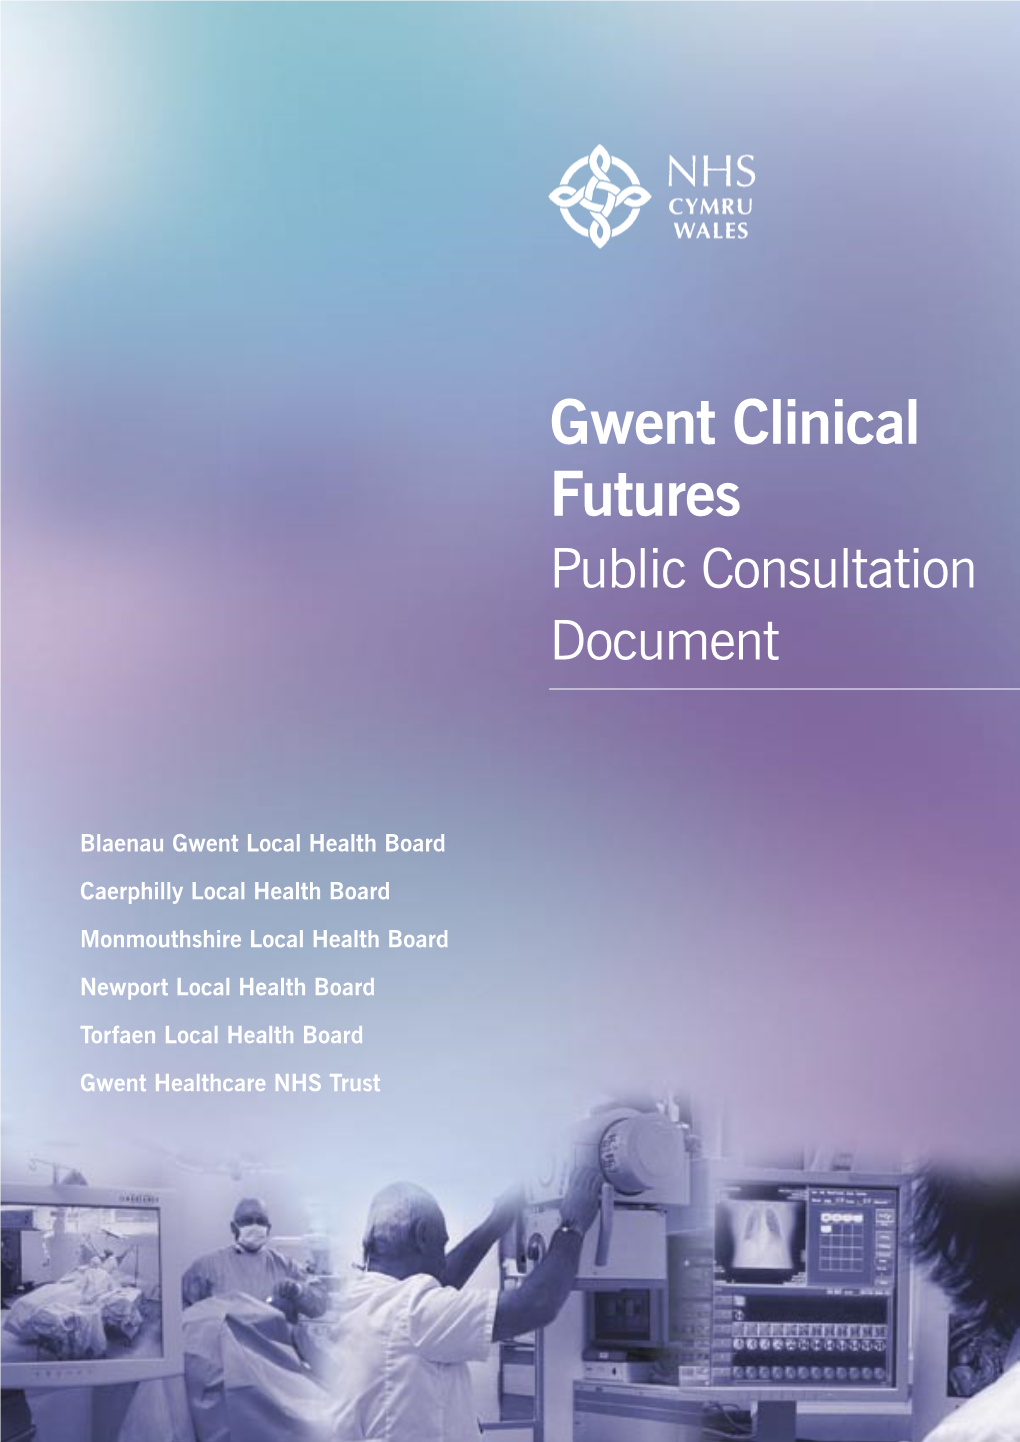 Gwent Clinical Futures Public Consultation Document